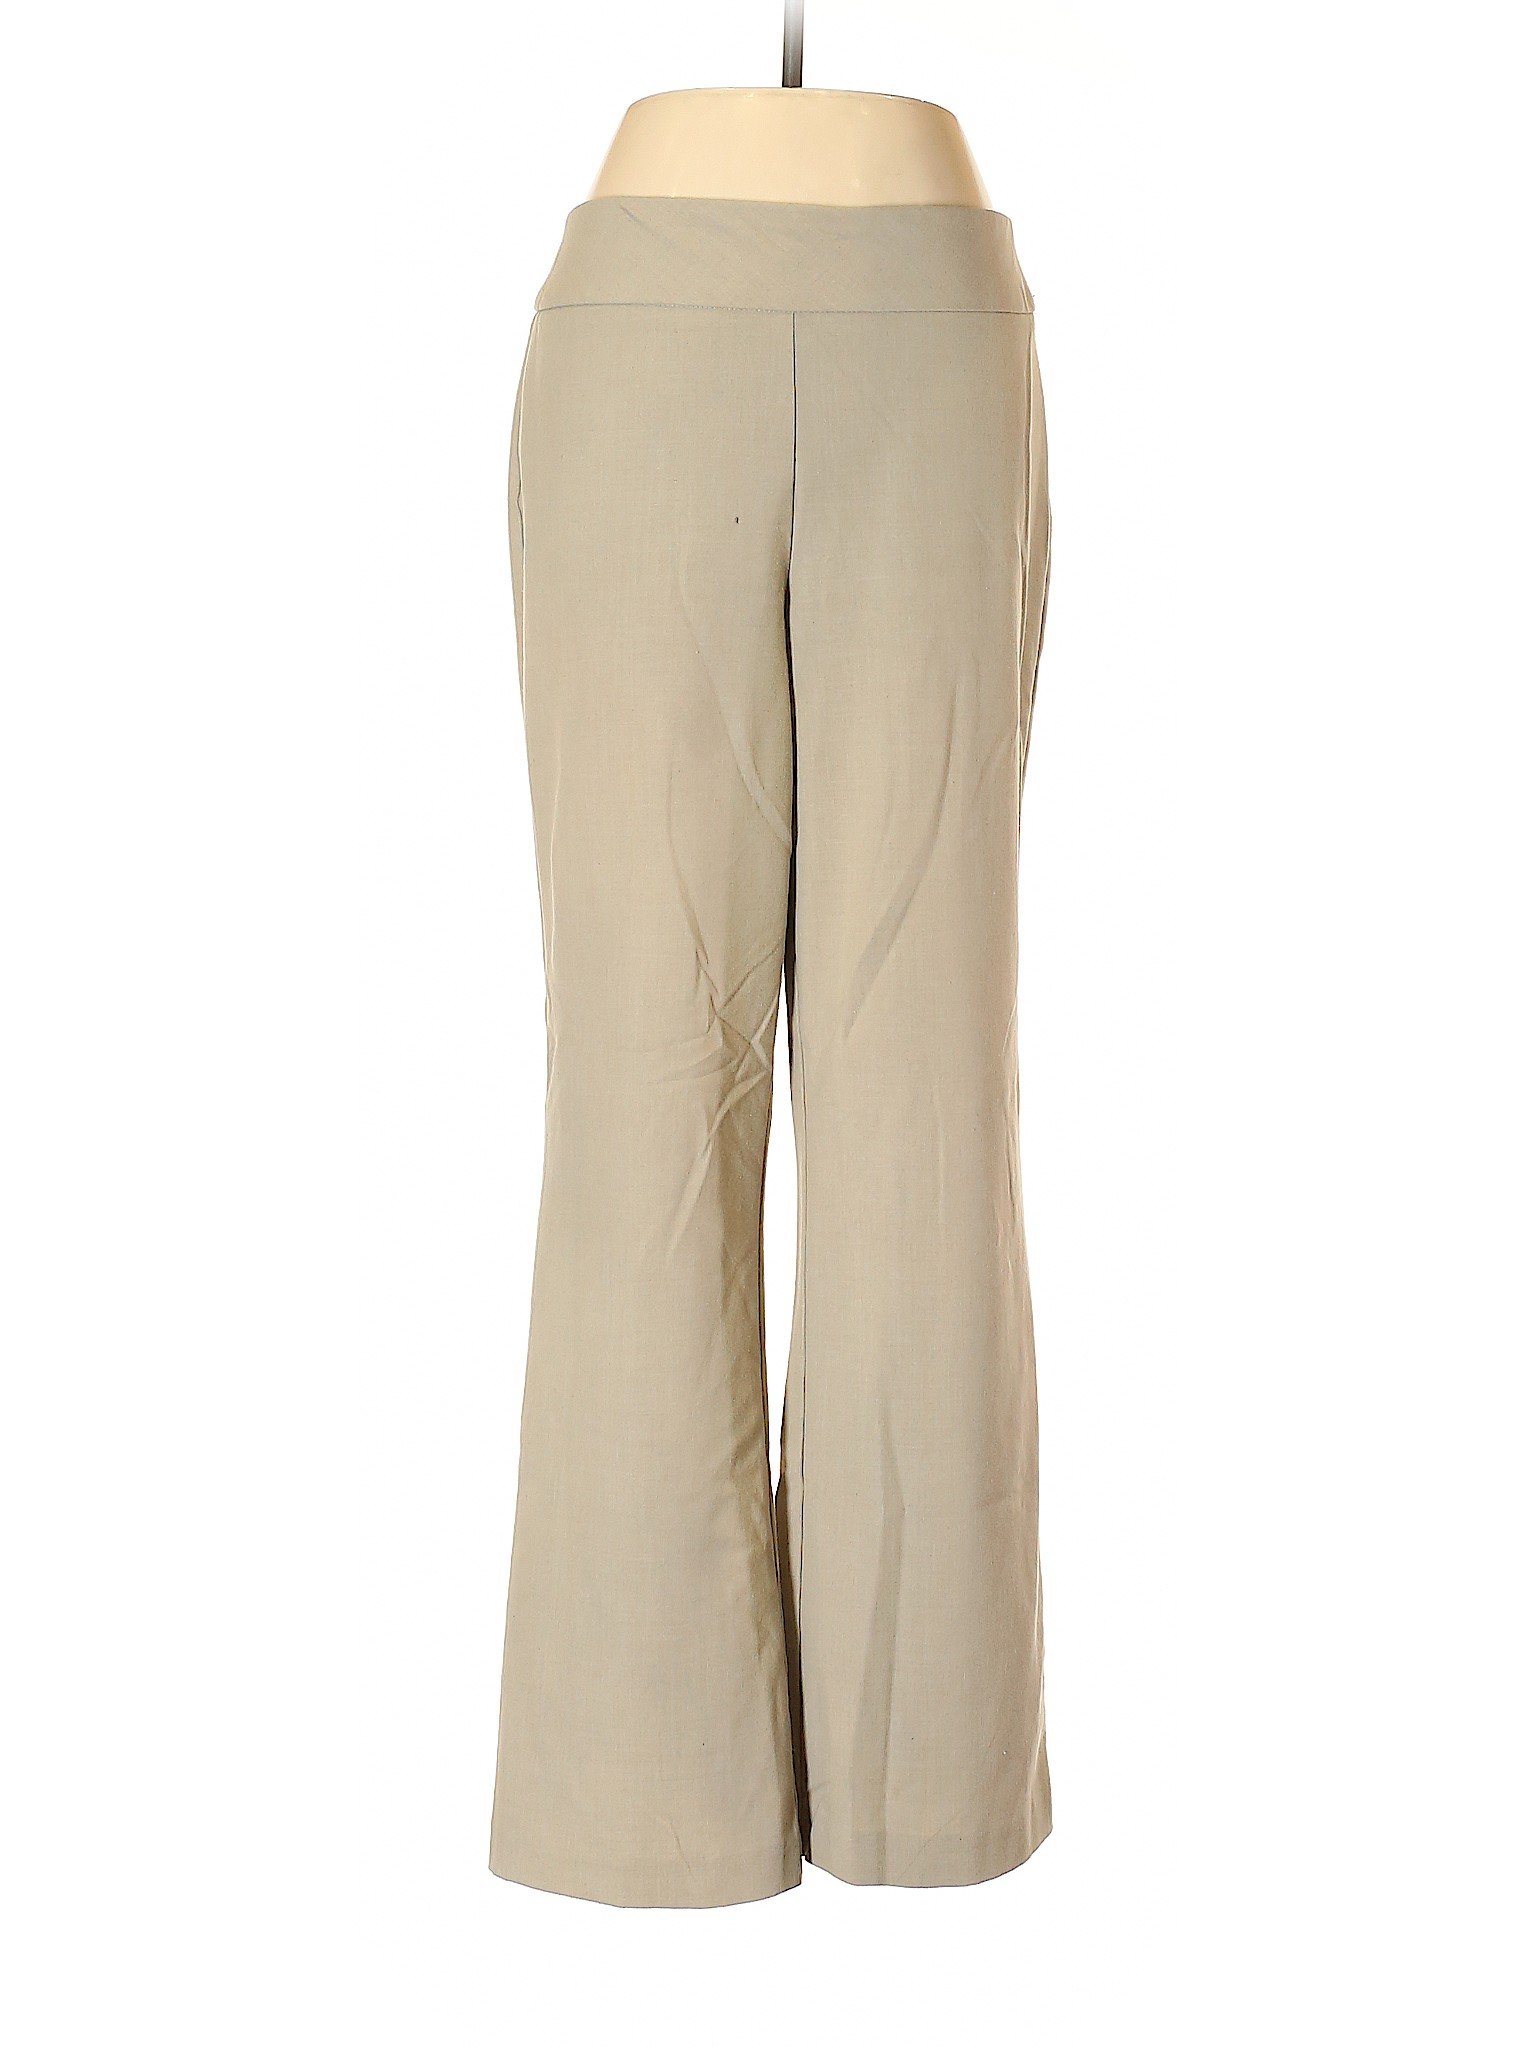 Roz & Ali Women Brown Casual Pants 8 | eBay